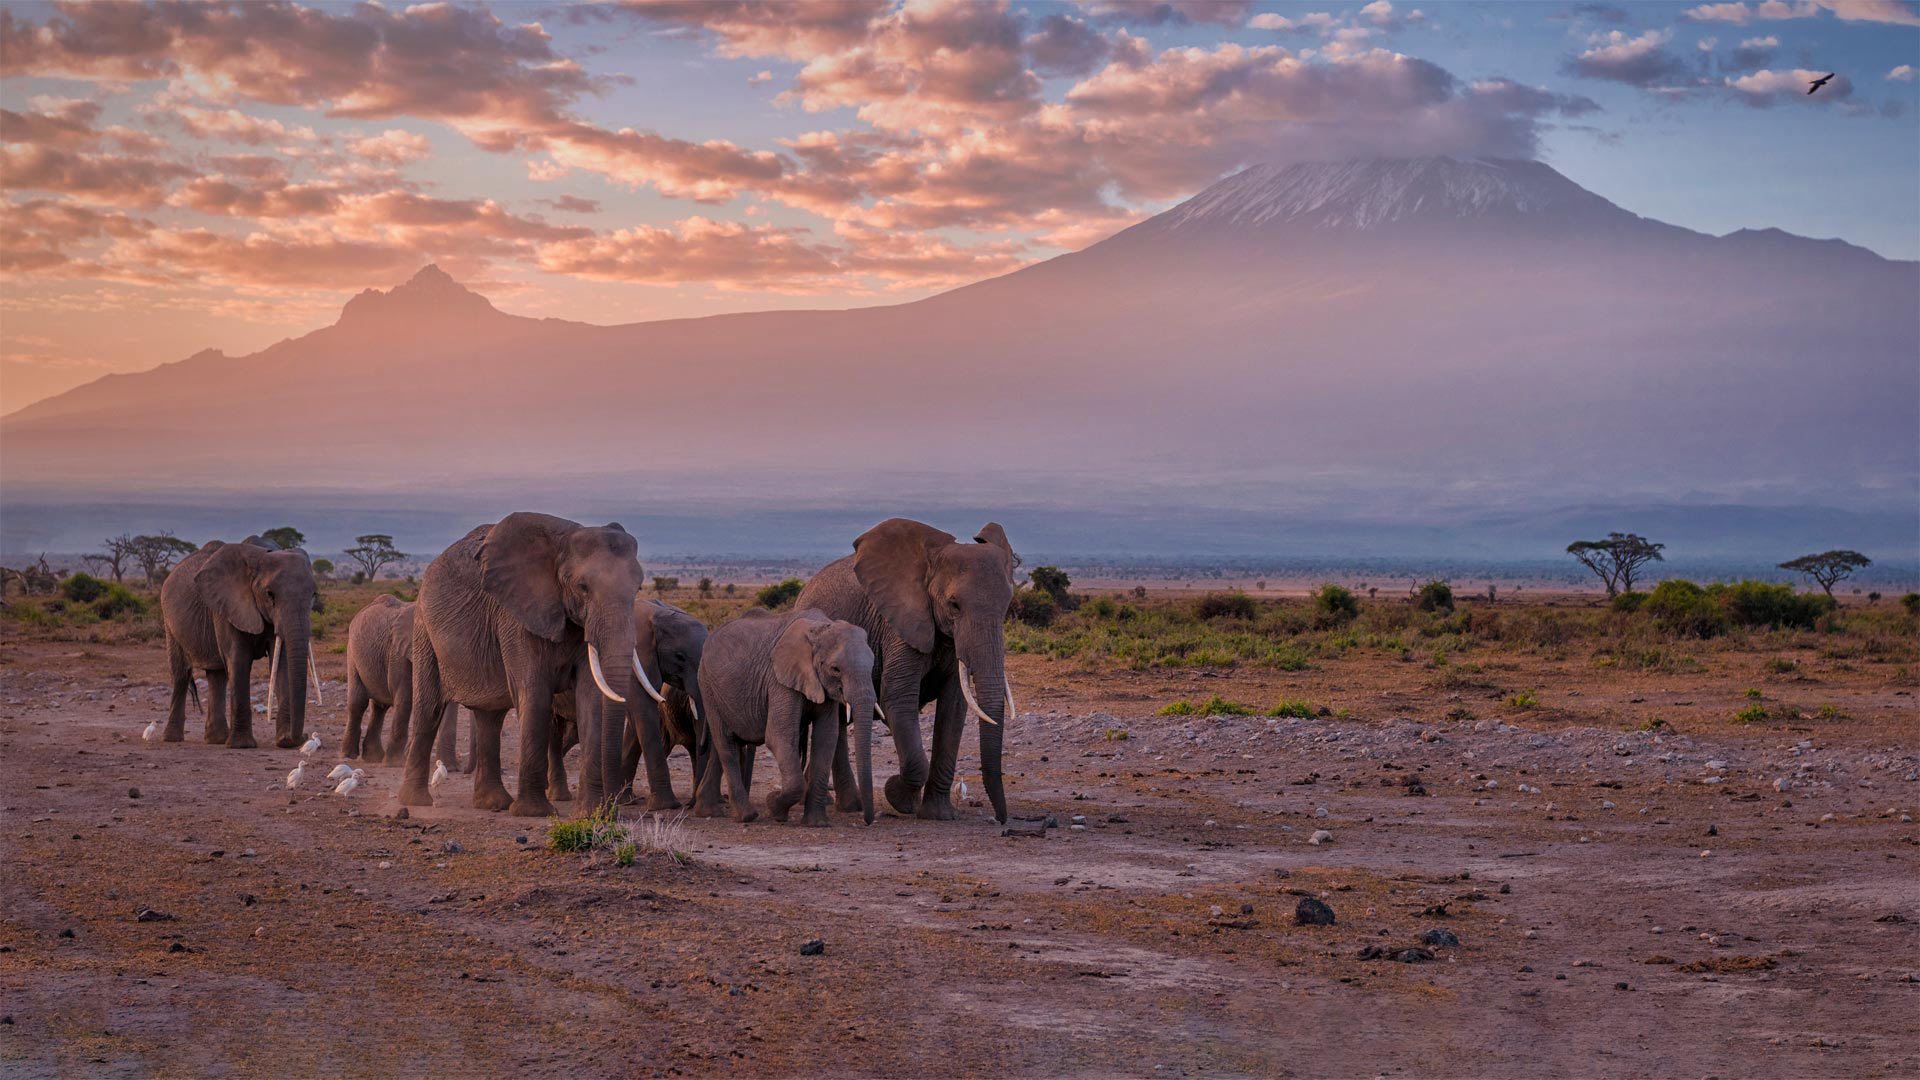 Sunrise Clear View Mount Kilimanjaro Background Stock Photo 1678344601 |  Shutterstock